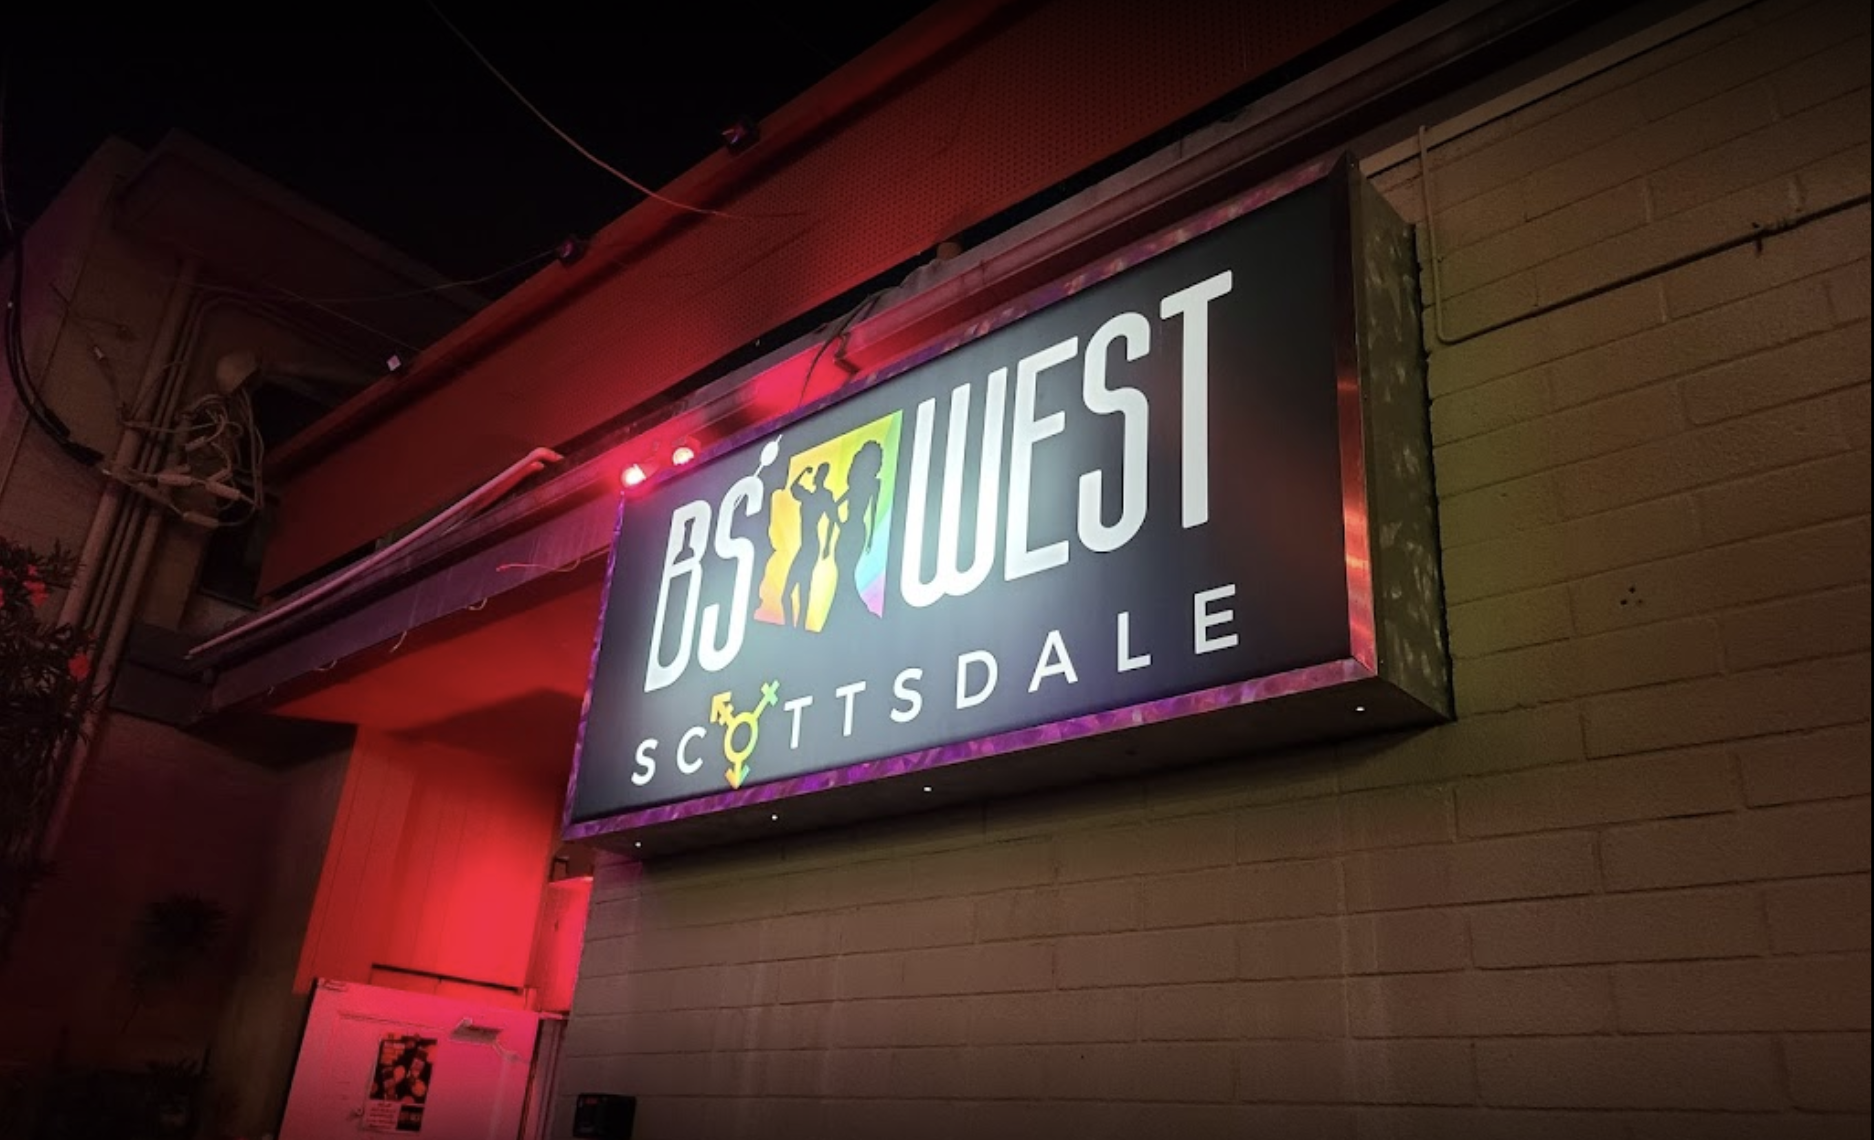 BS West Dance Club in Scottsdale 